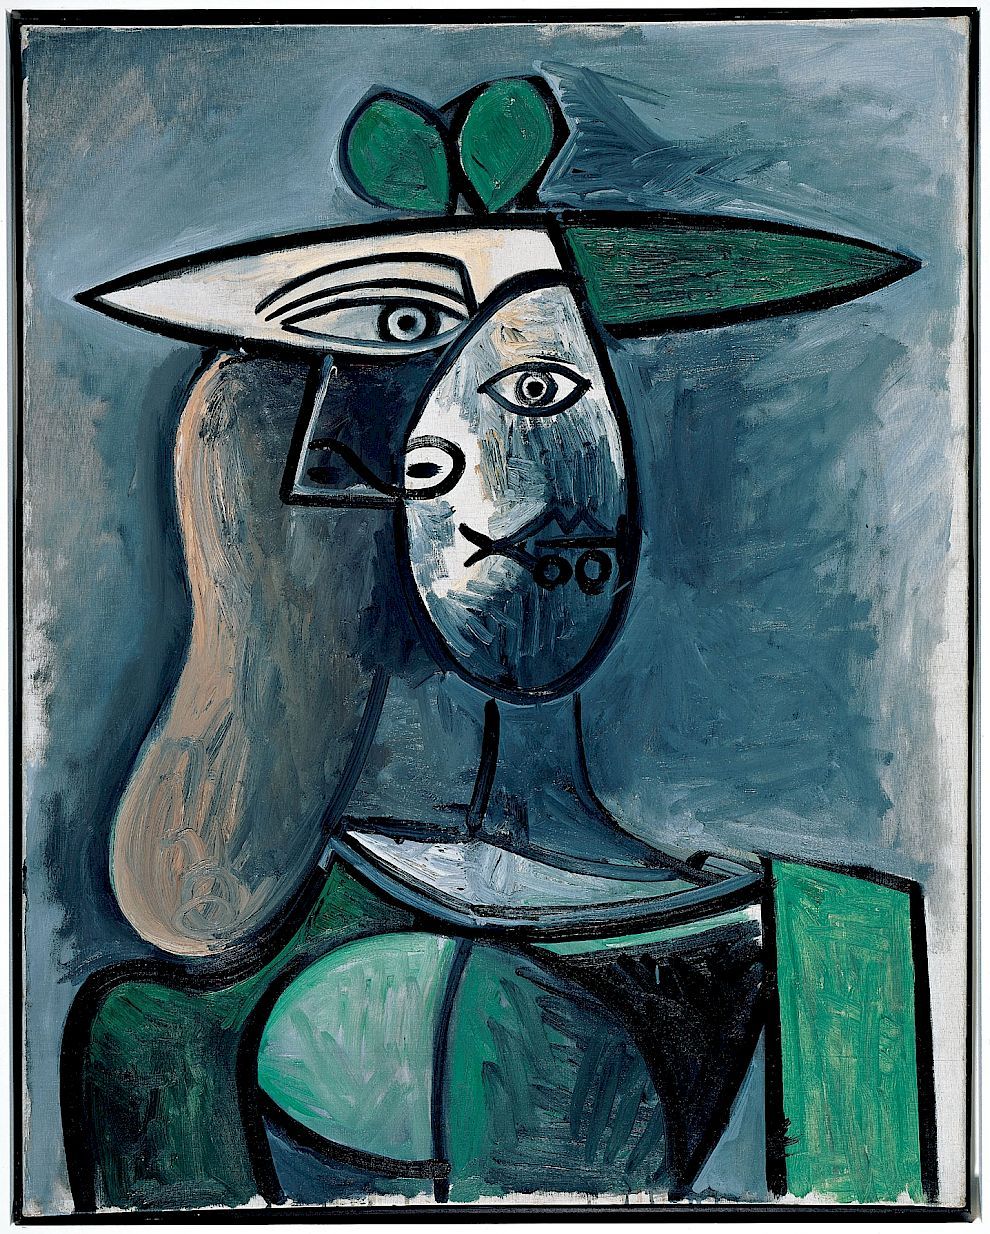 Pablo Picasso: Woman in a green hat, The Albertina Museum, Vienna. The Batliner Collection © Bildrecht, Vienna, 2018